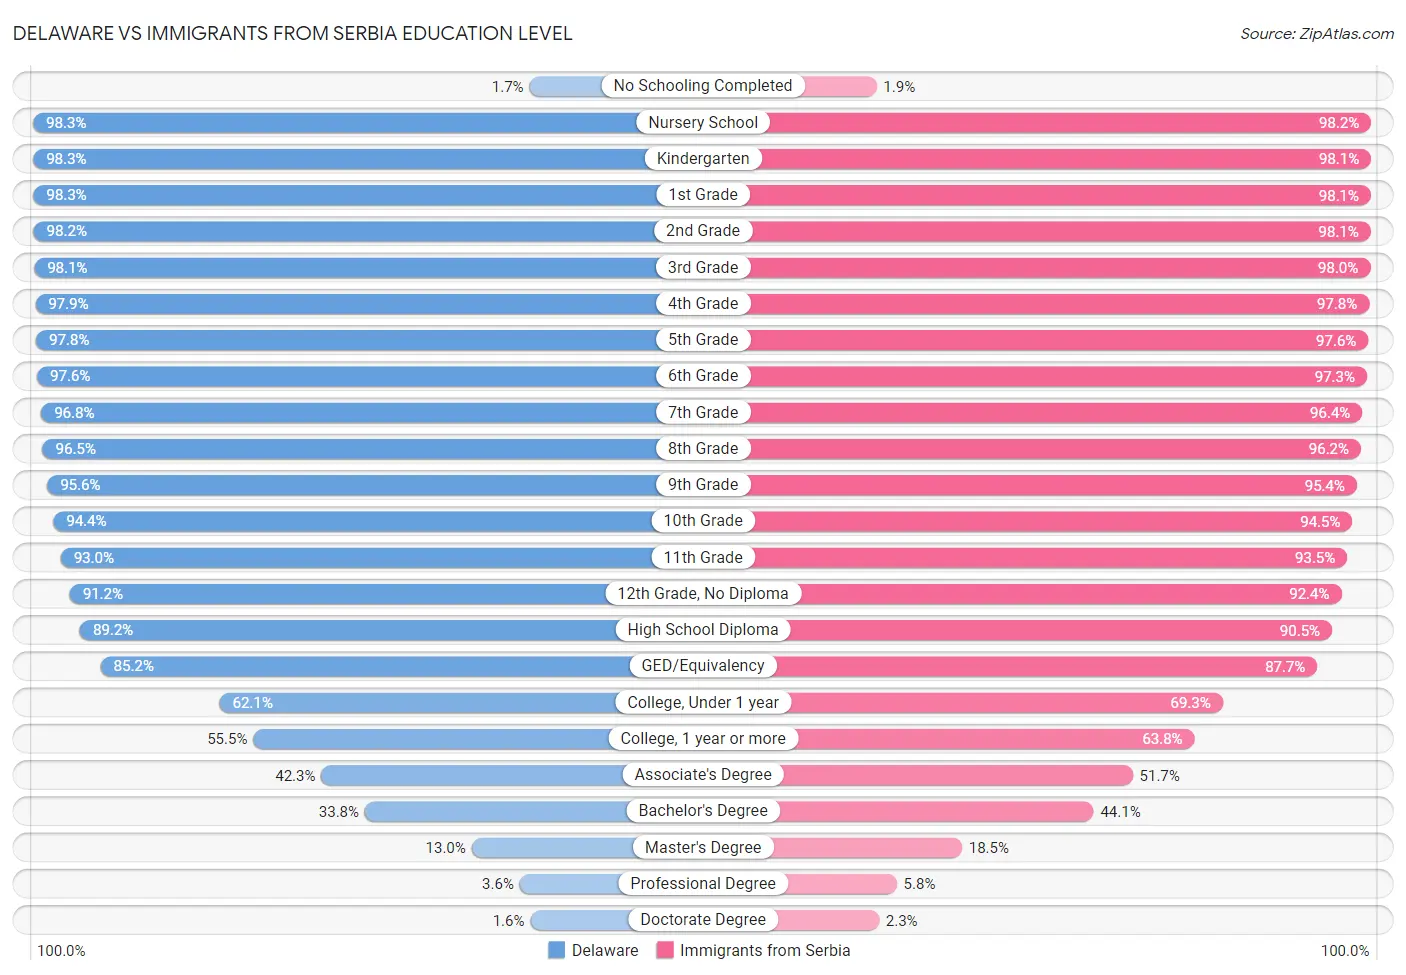 Delaware vs Immigrants from Serbia Education Level